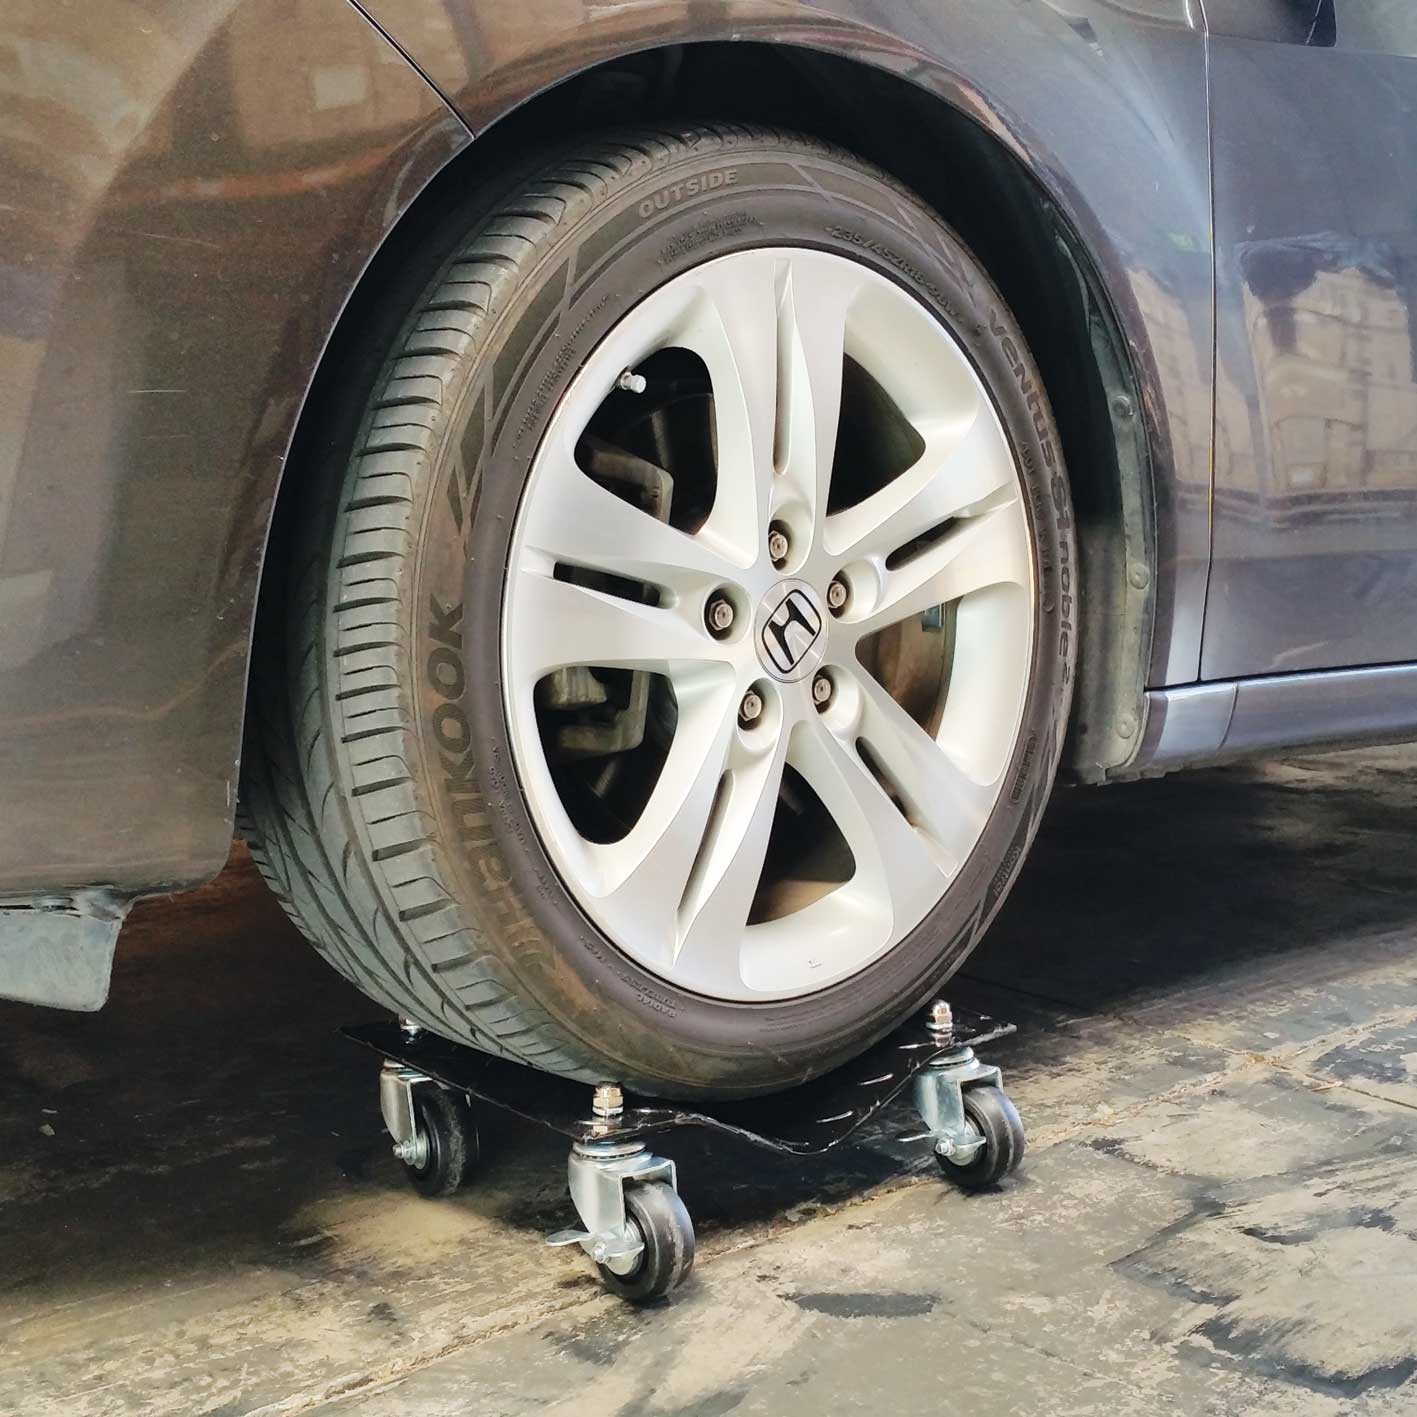 Toolsempire 4 X 3 Tire Wheel Dollies Dolly Vehicle Car Auto Repair Moving Diamond Gray 4 PCS/Set 